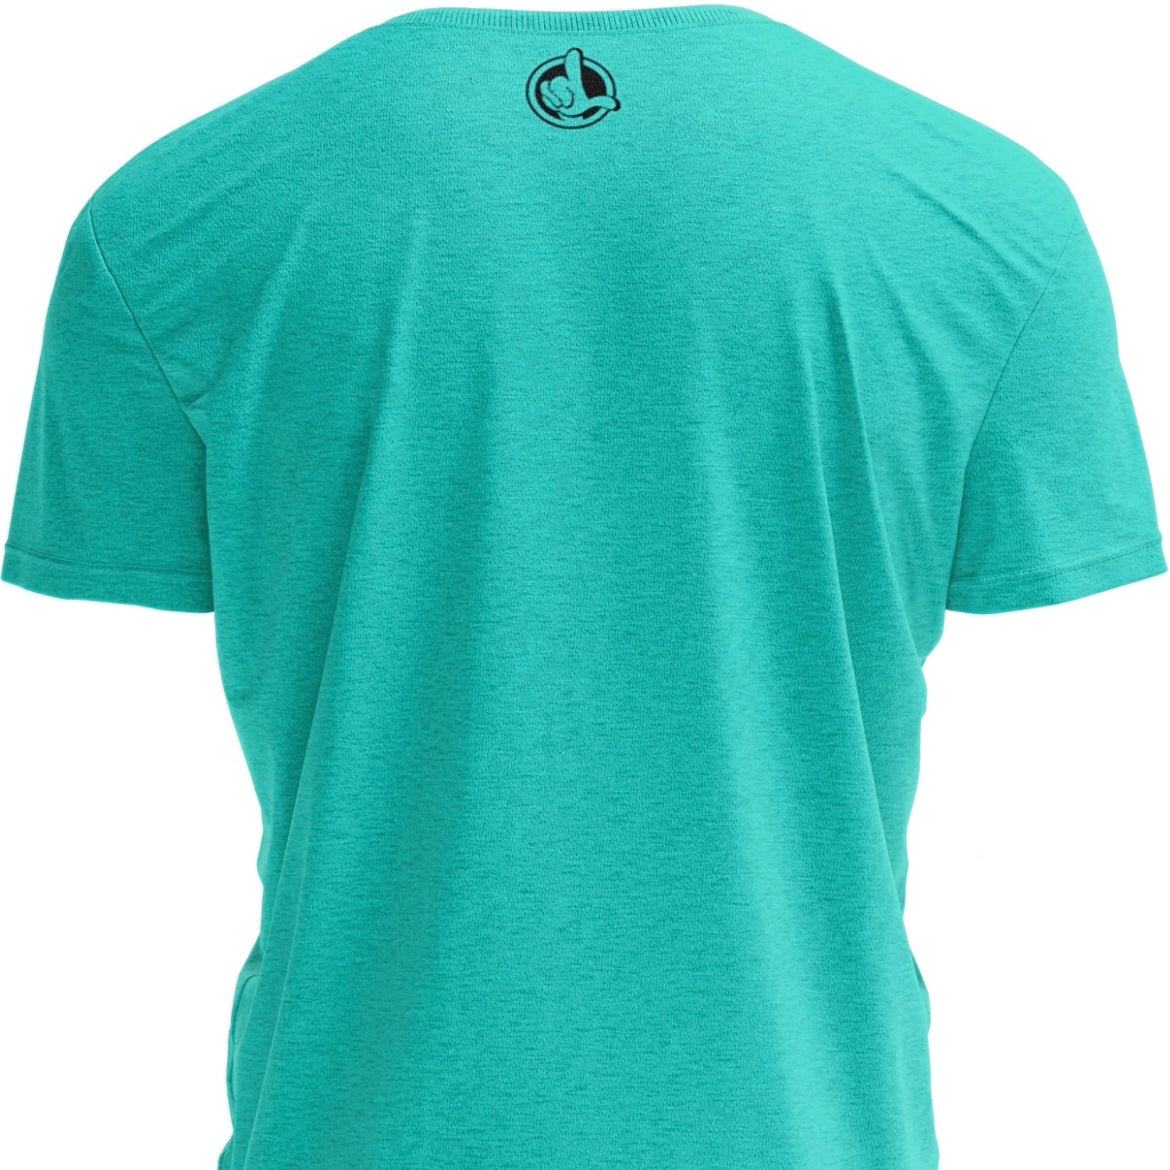 LT Teddy T-Shirt (Turquoise)